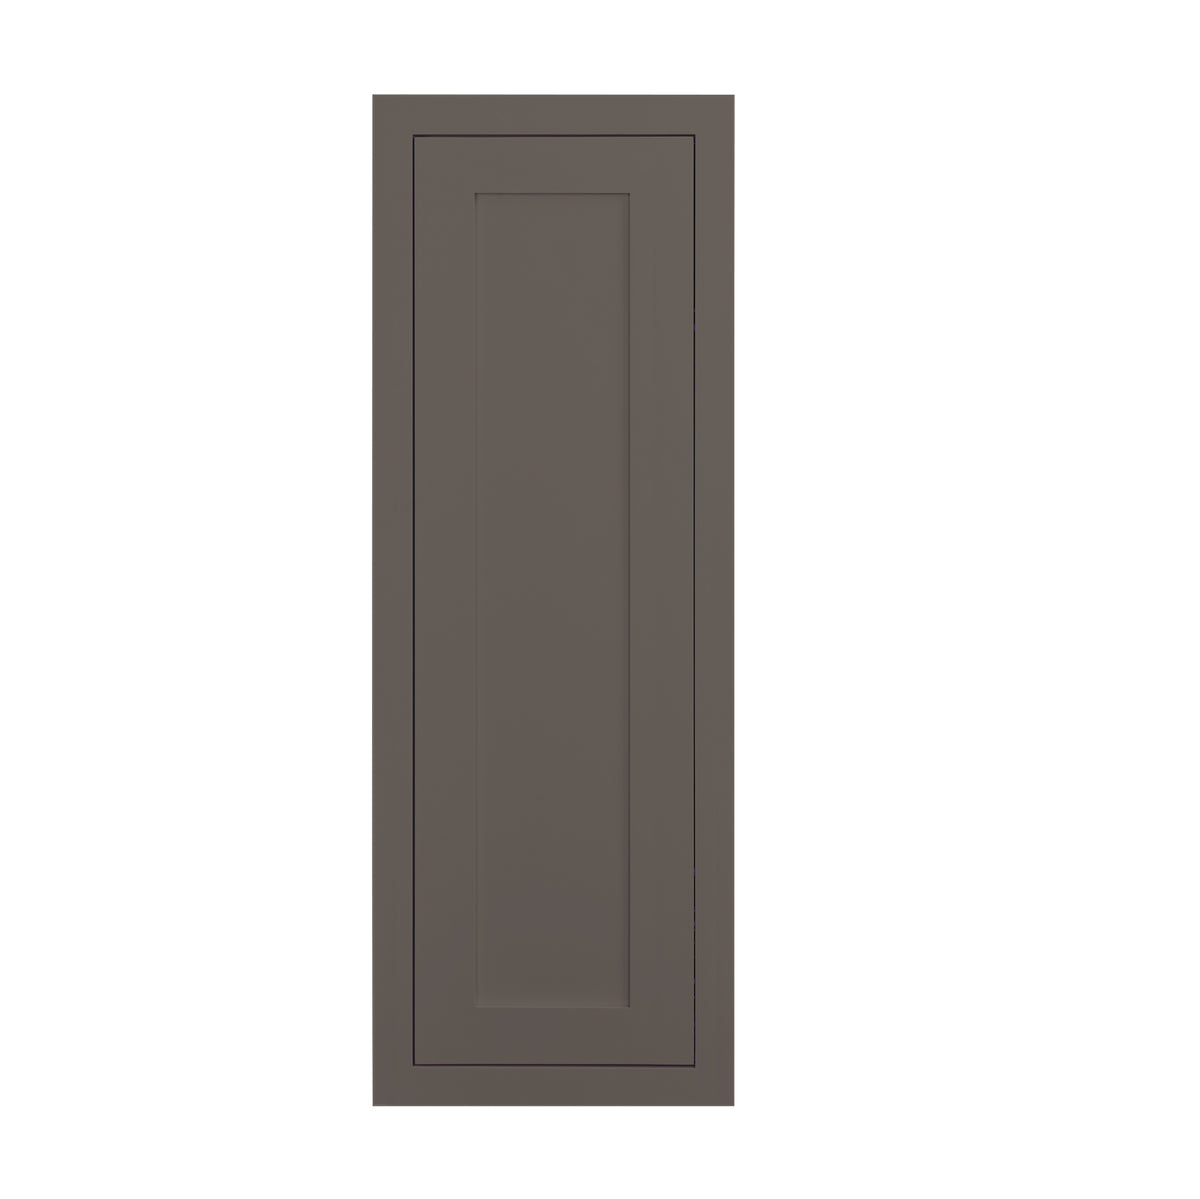 39" Tall Dark Gray Inset Shaker Wall Cabinet - Single Door 9", 12", 15", 18" & 21" Wide - RTA Wholesalers